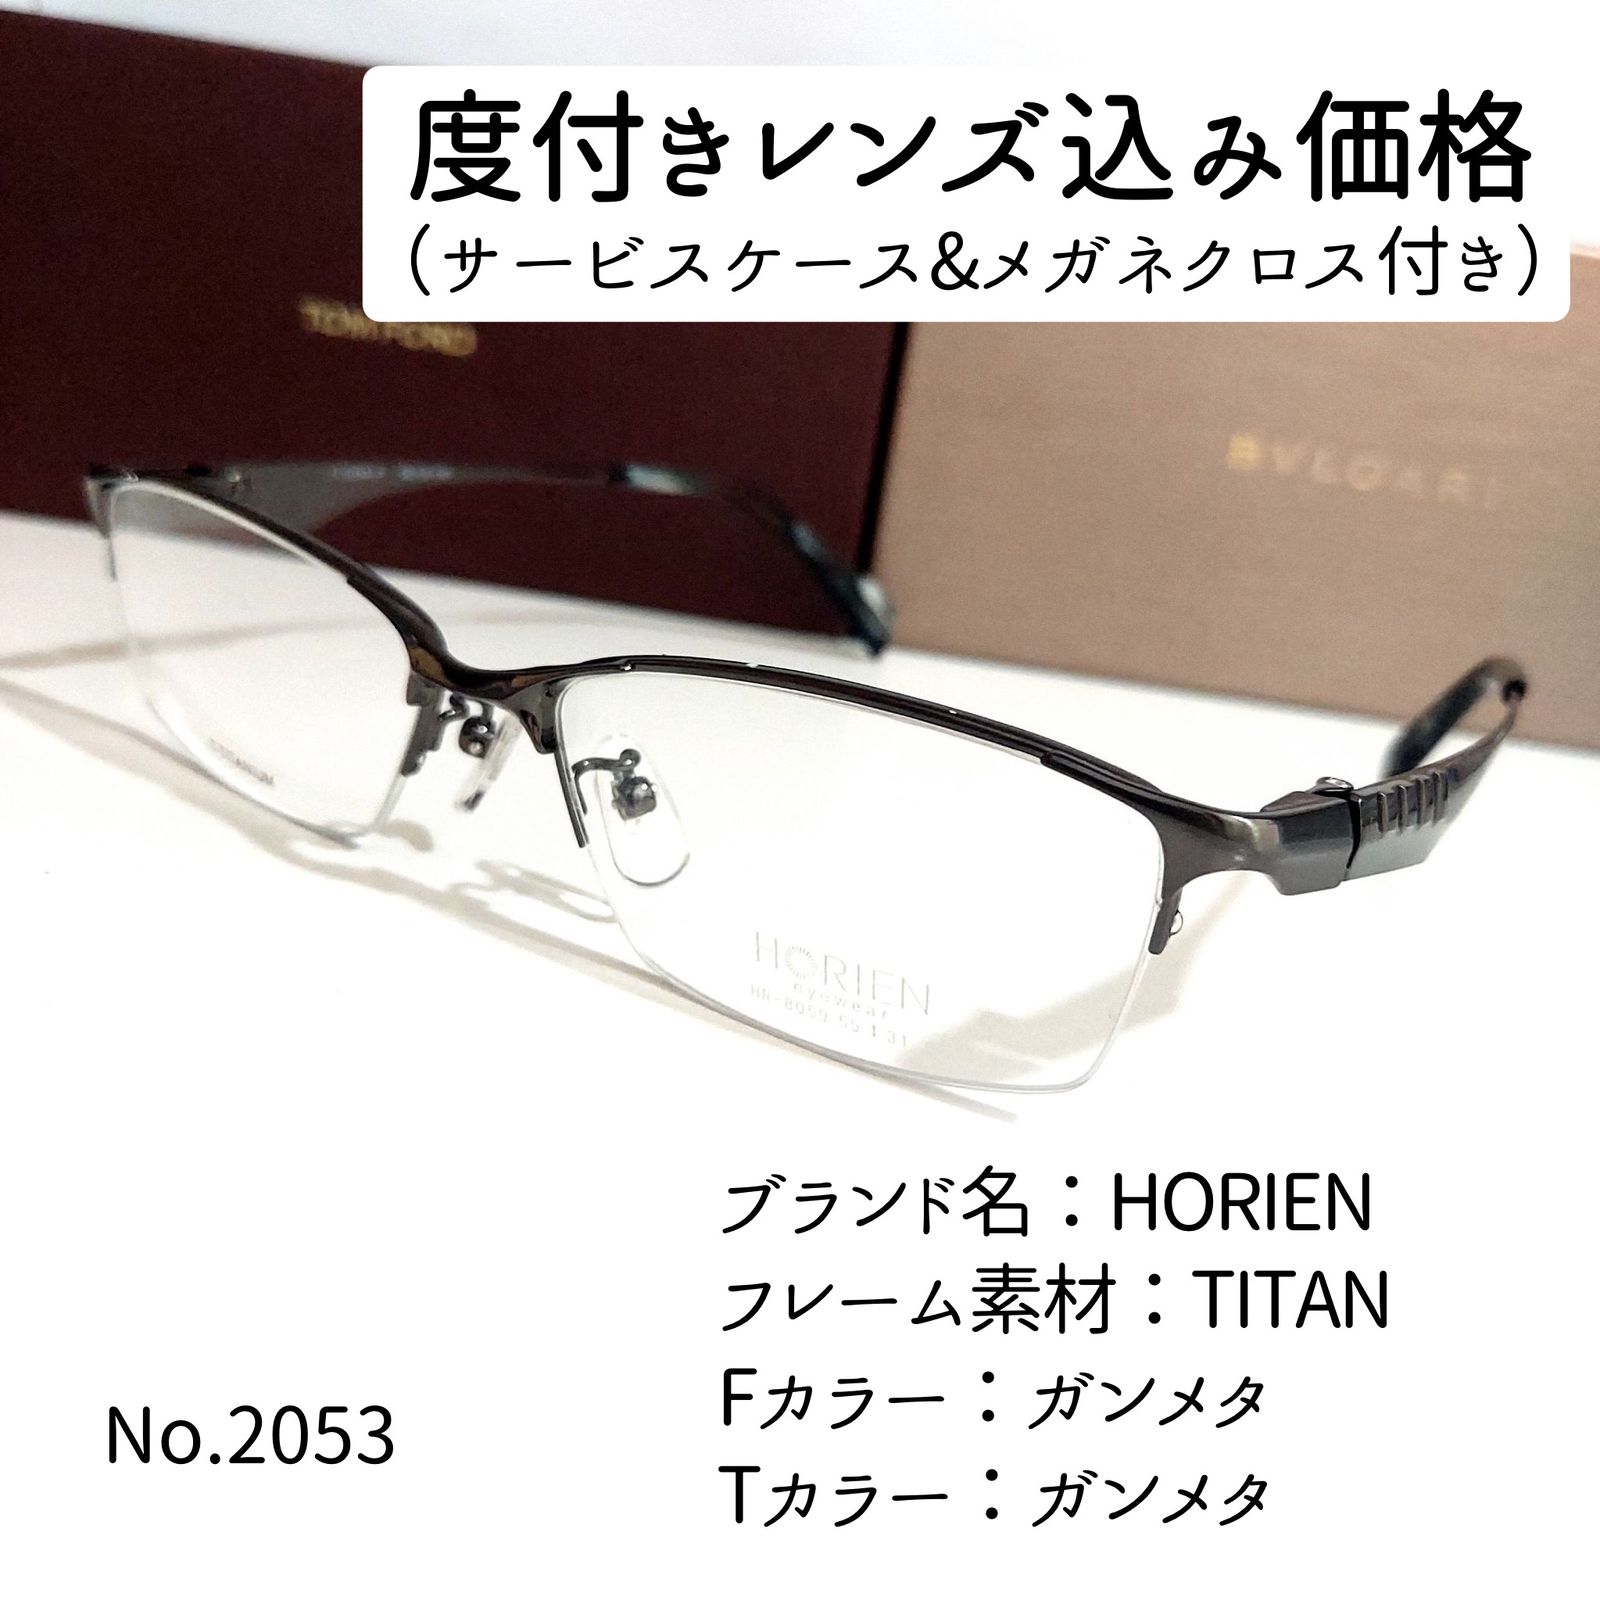 No.2053メガネ HORIEN【度数入り込み価格】-